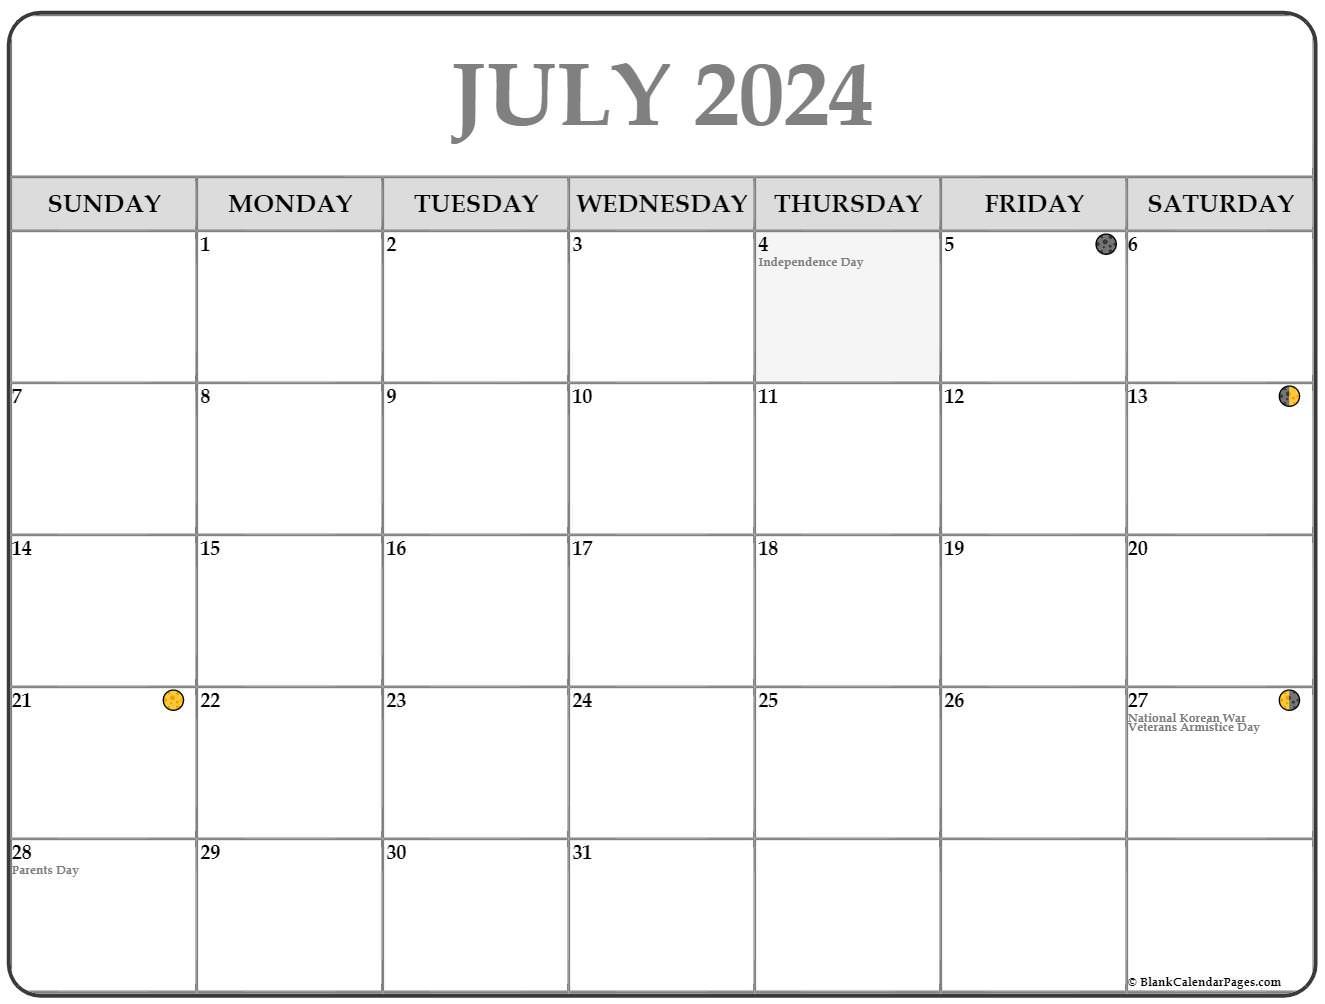 July 2024 Lunar Calendar | Moon Phase Calendar for July Calendar with Moon Phases 2024